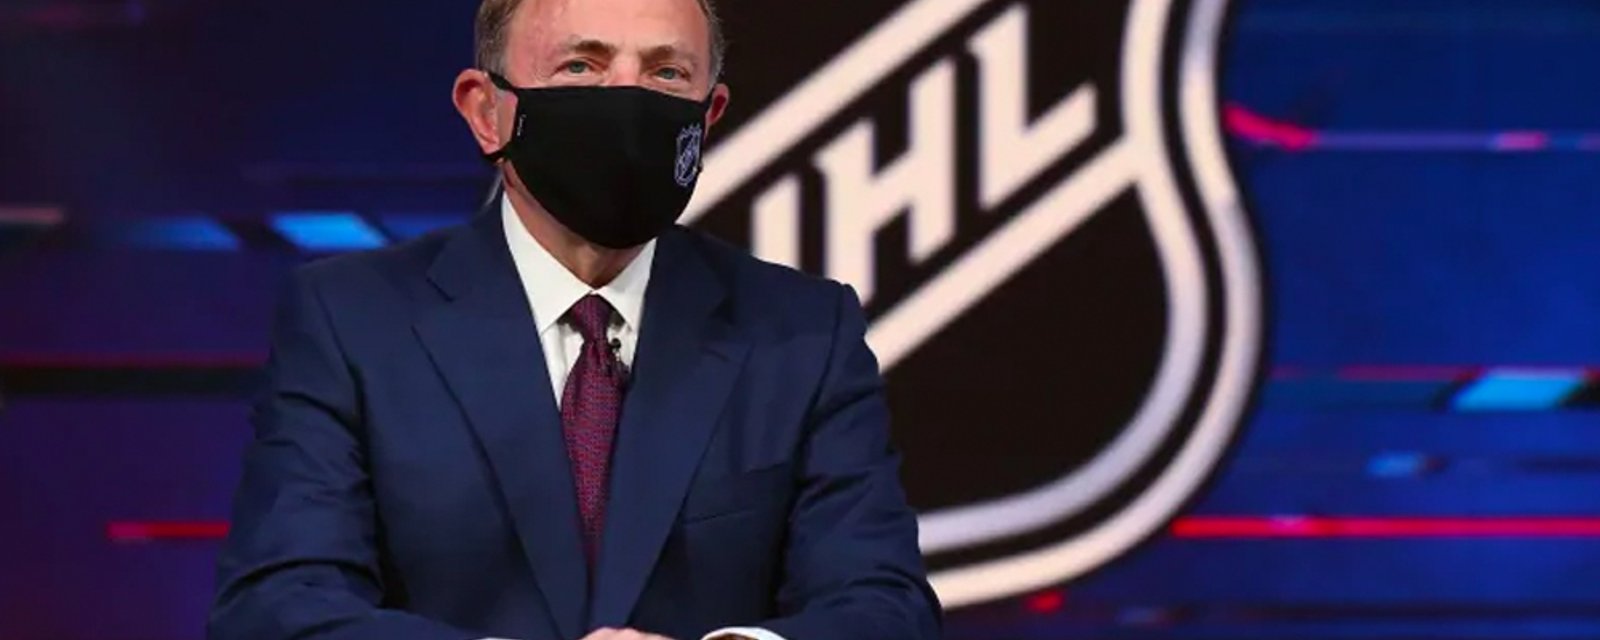 Gary Bettman provides a major update on the 2020-21 NHL season